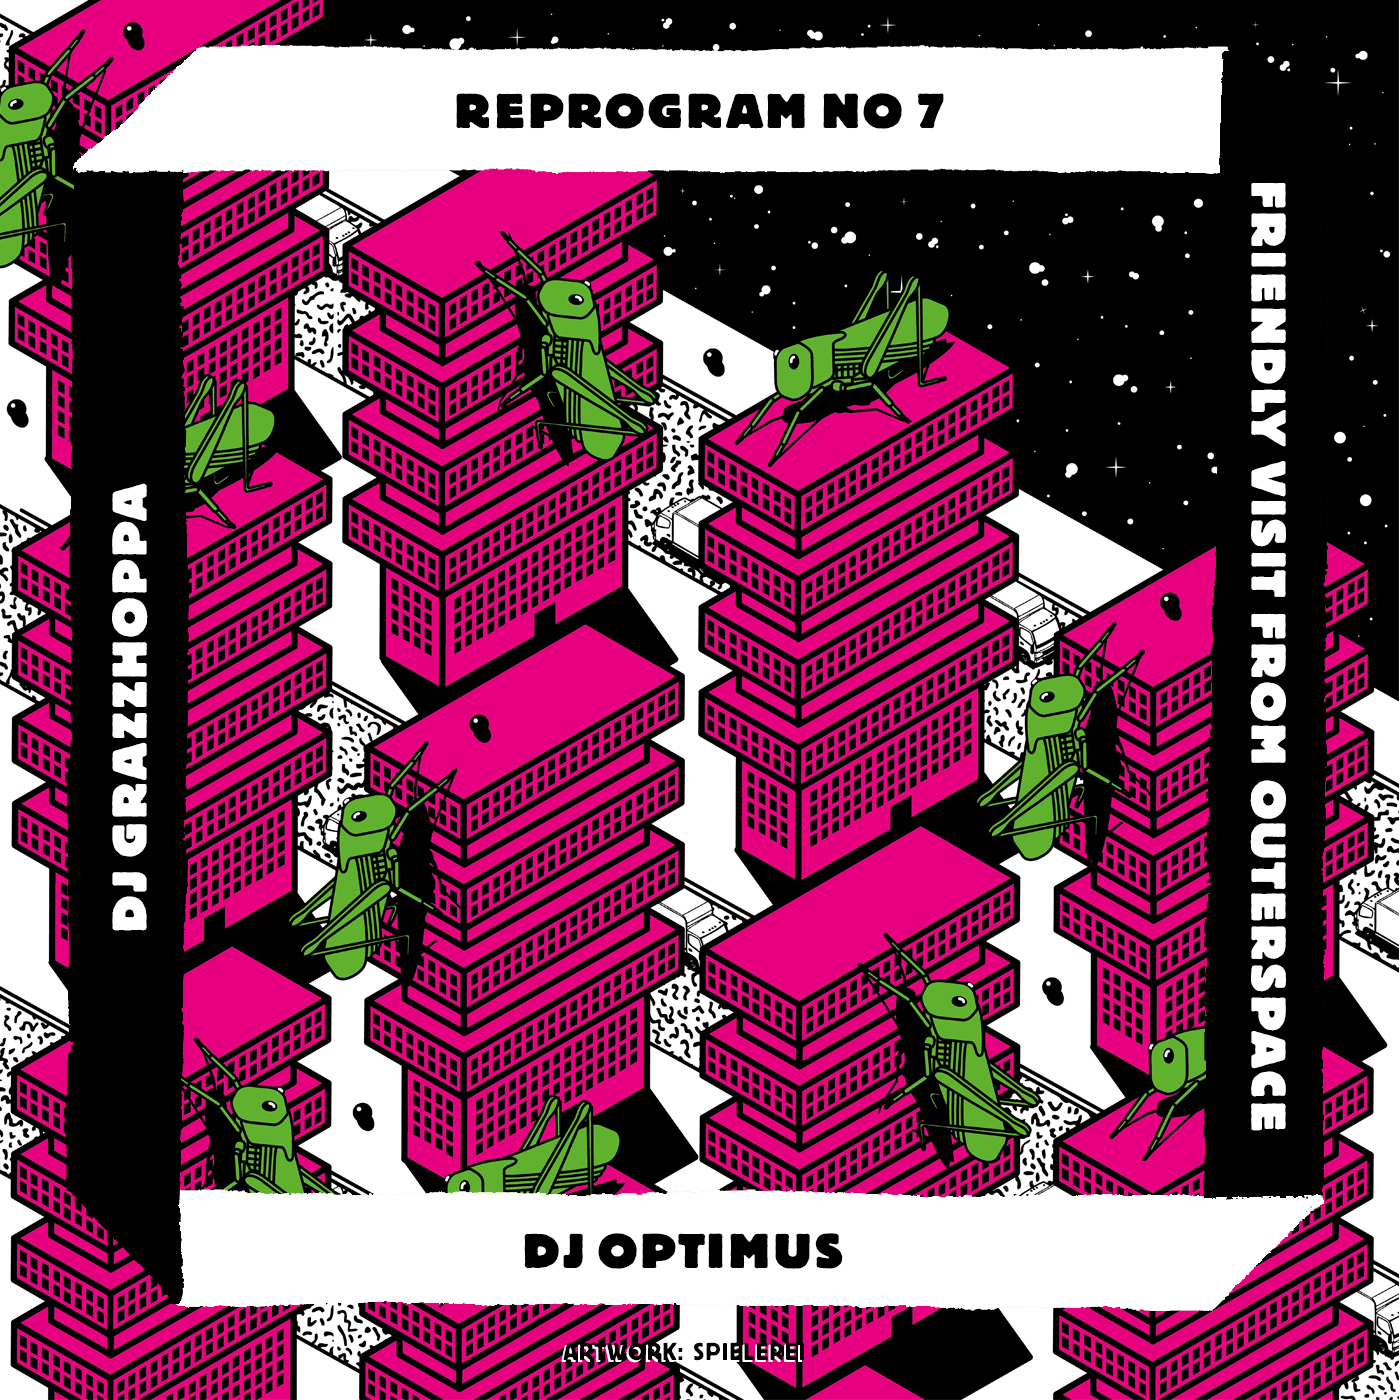 Free MP3: DJ Grazzhoppa – Friendly Visit From Outta Space (DJ Optimus Remix)